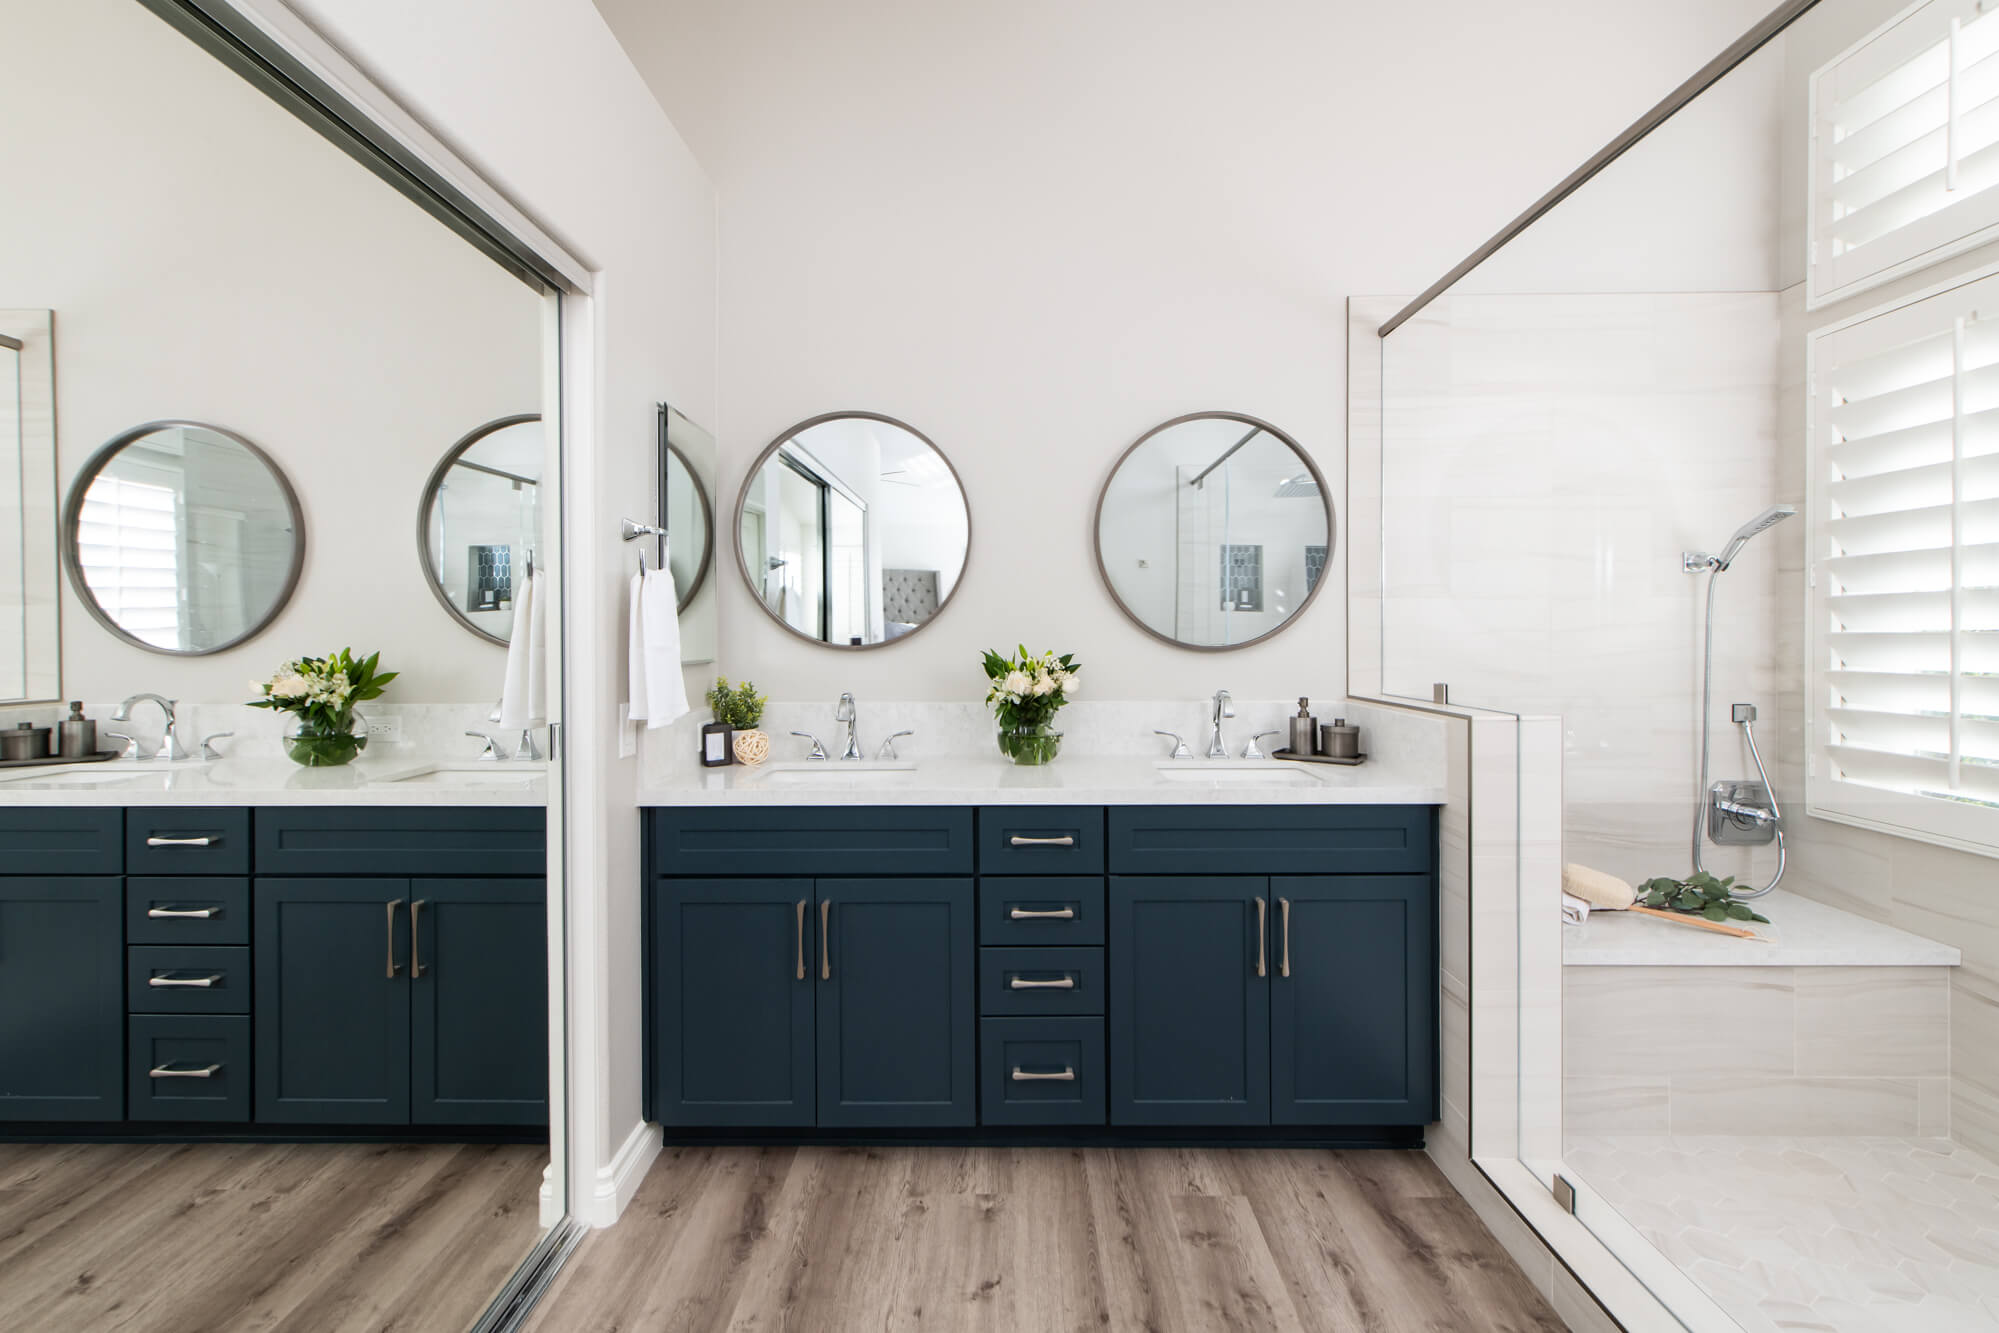 Foothill Ranch master bathroom remodel with farmhouse design - bring color into your bathroom - bathroom design trends